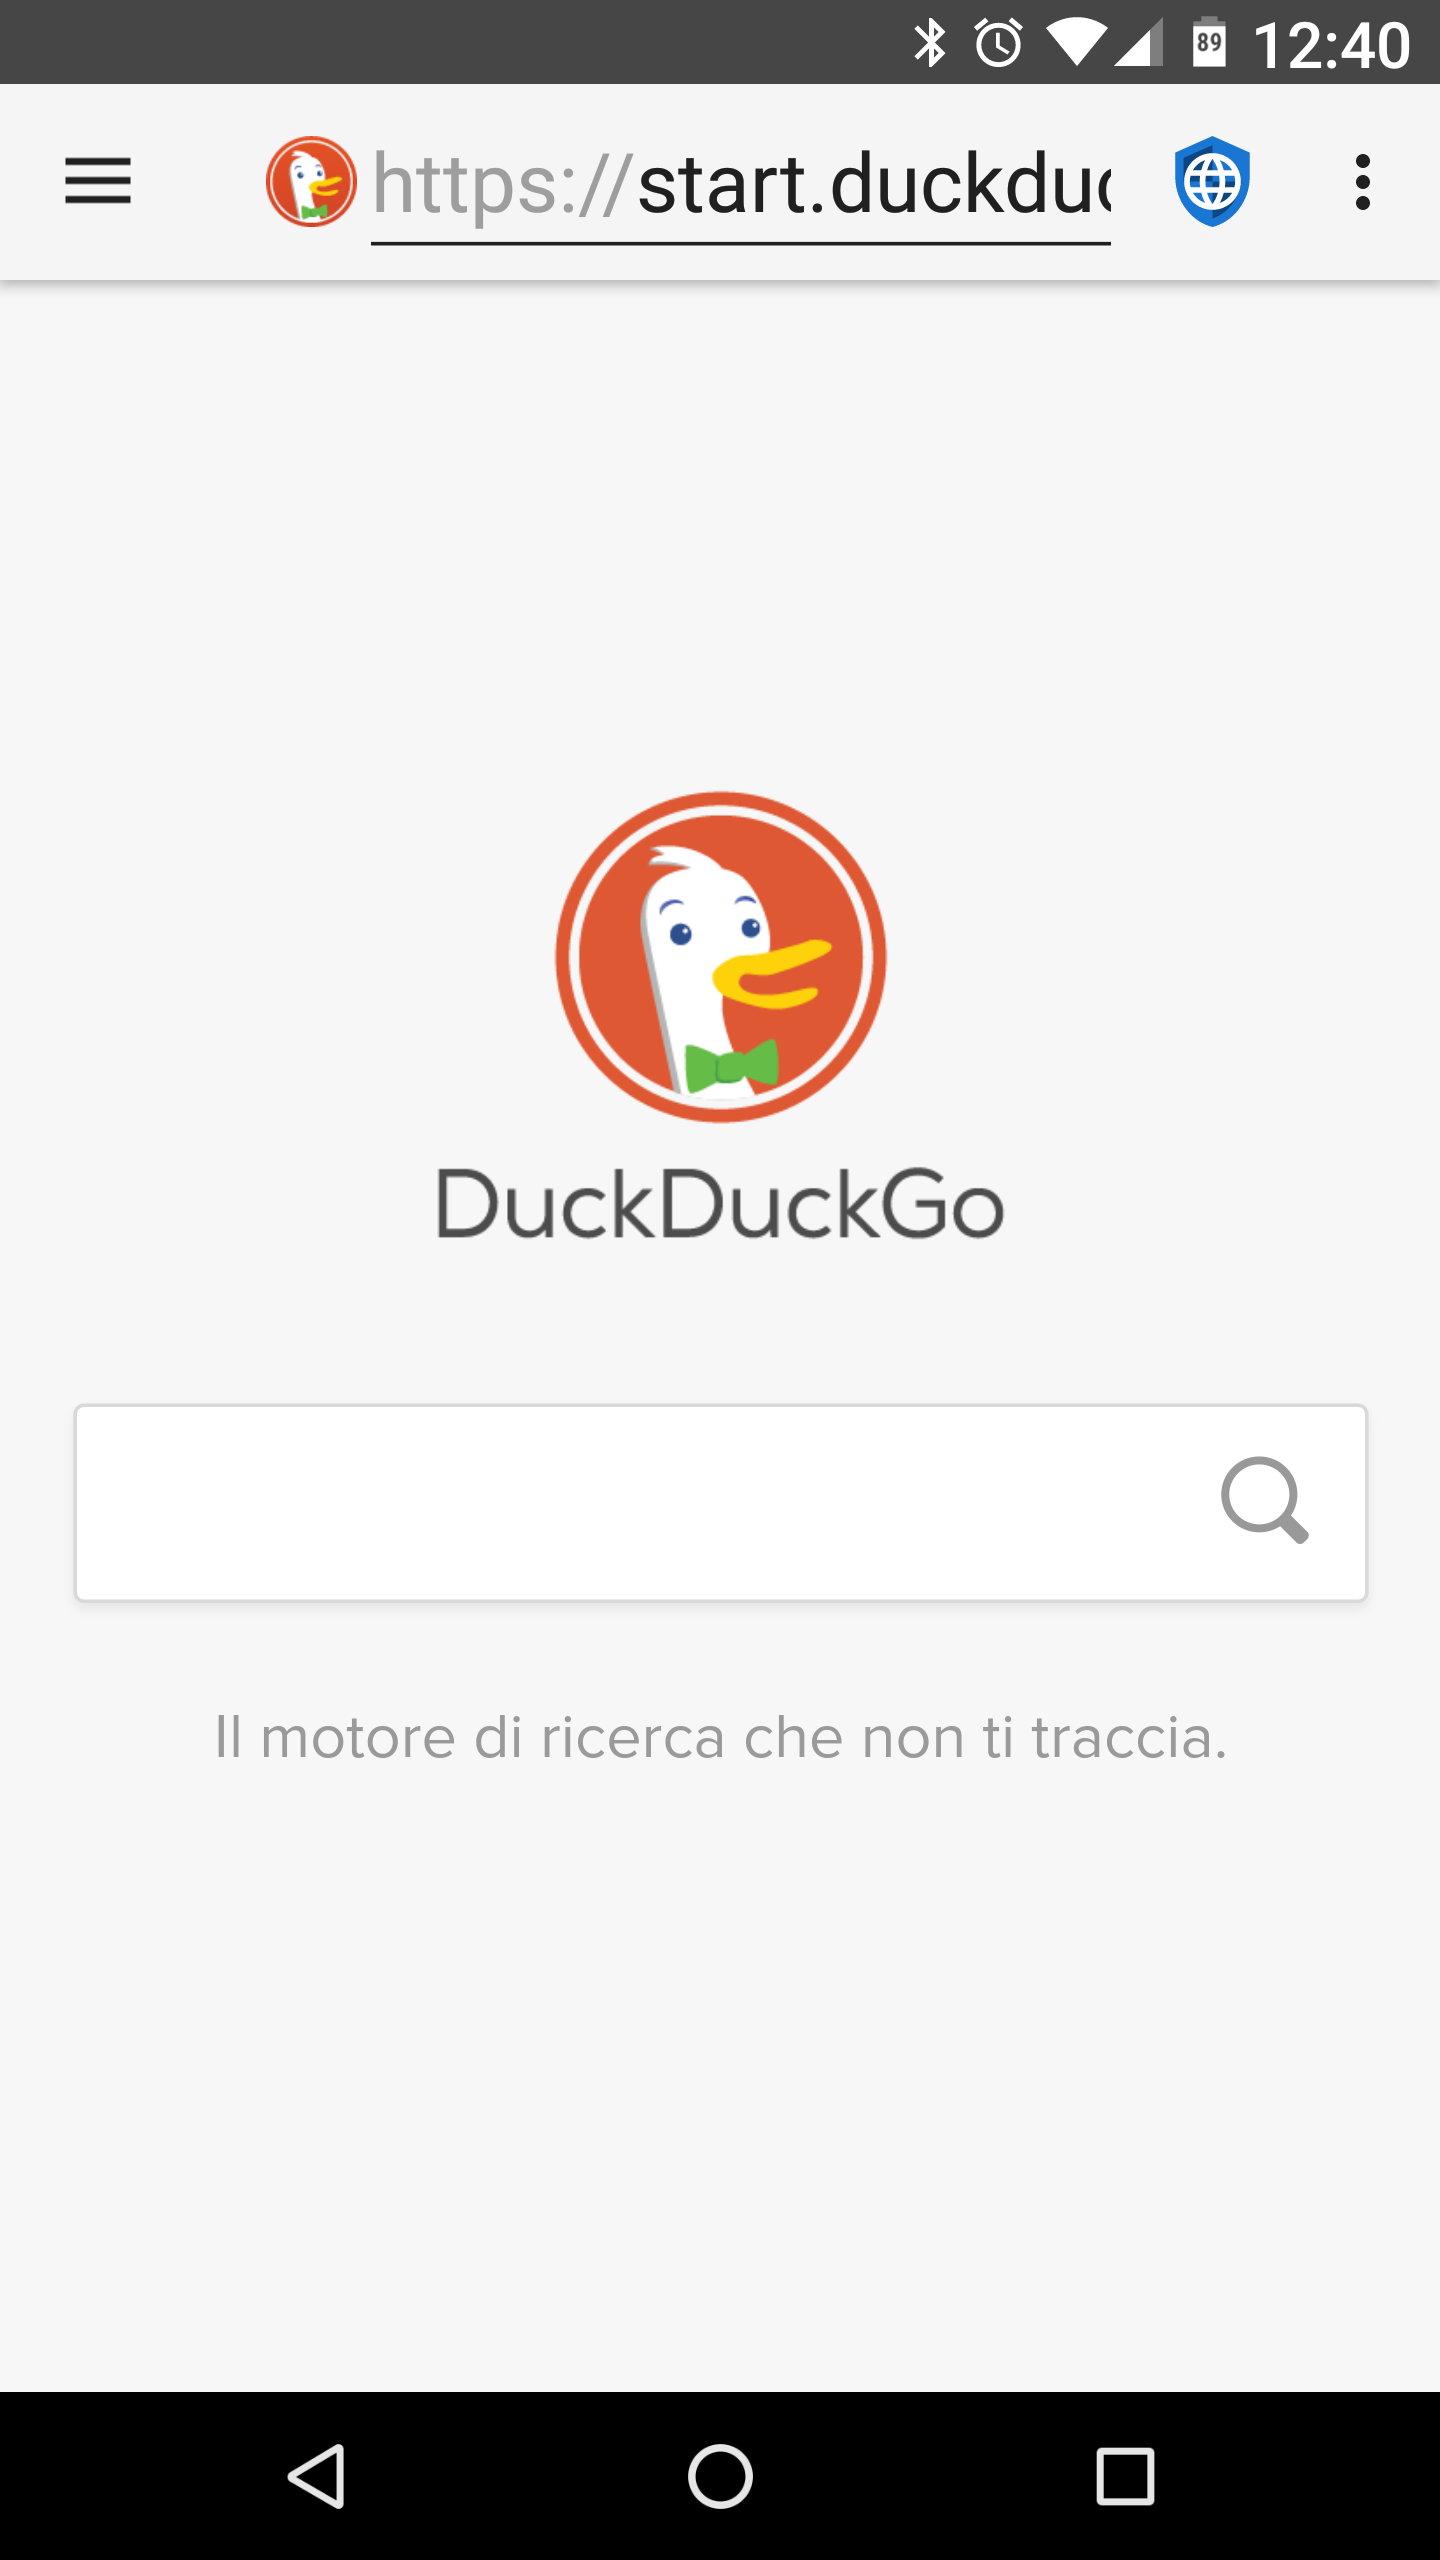 fastlane/metadata/android/it/phoneScreenshots/01-DuckDuckGo.png